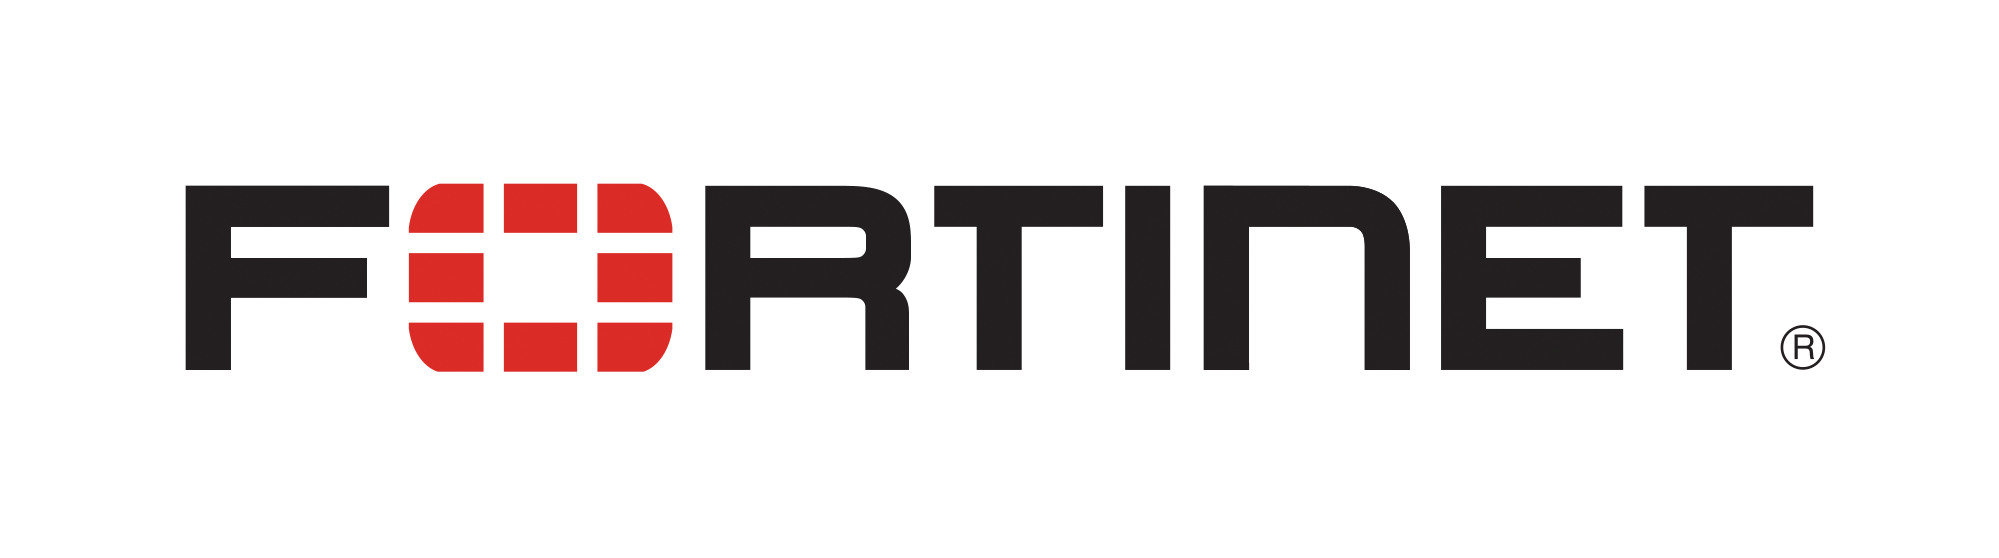 Fortinet_LogoTag_BlackRed